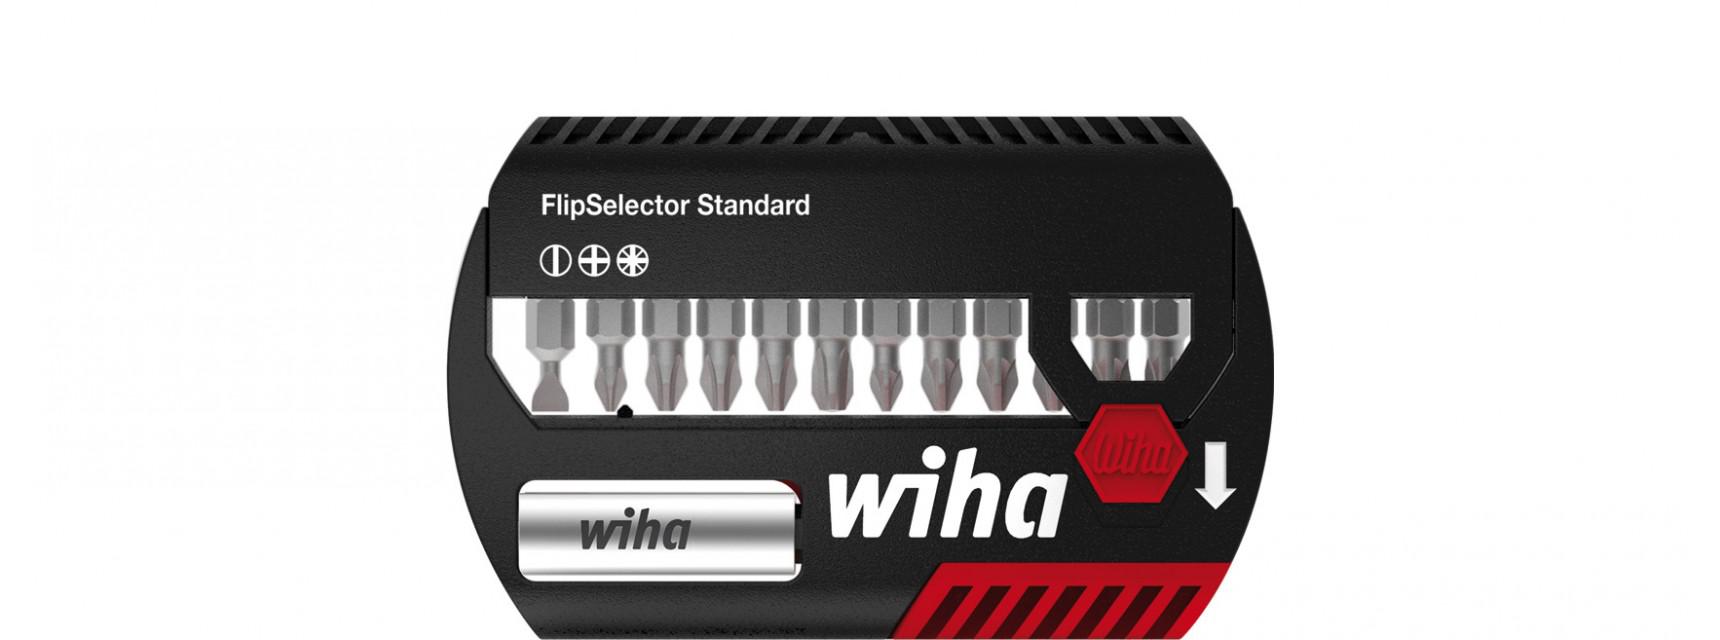 Набор бит FlipSelector Standard 25 мм SB 7947-005 WIHA 39049